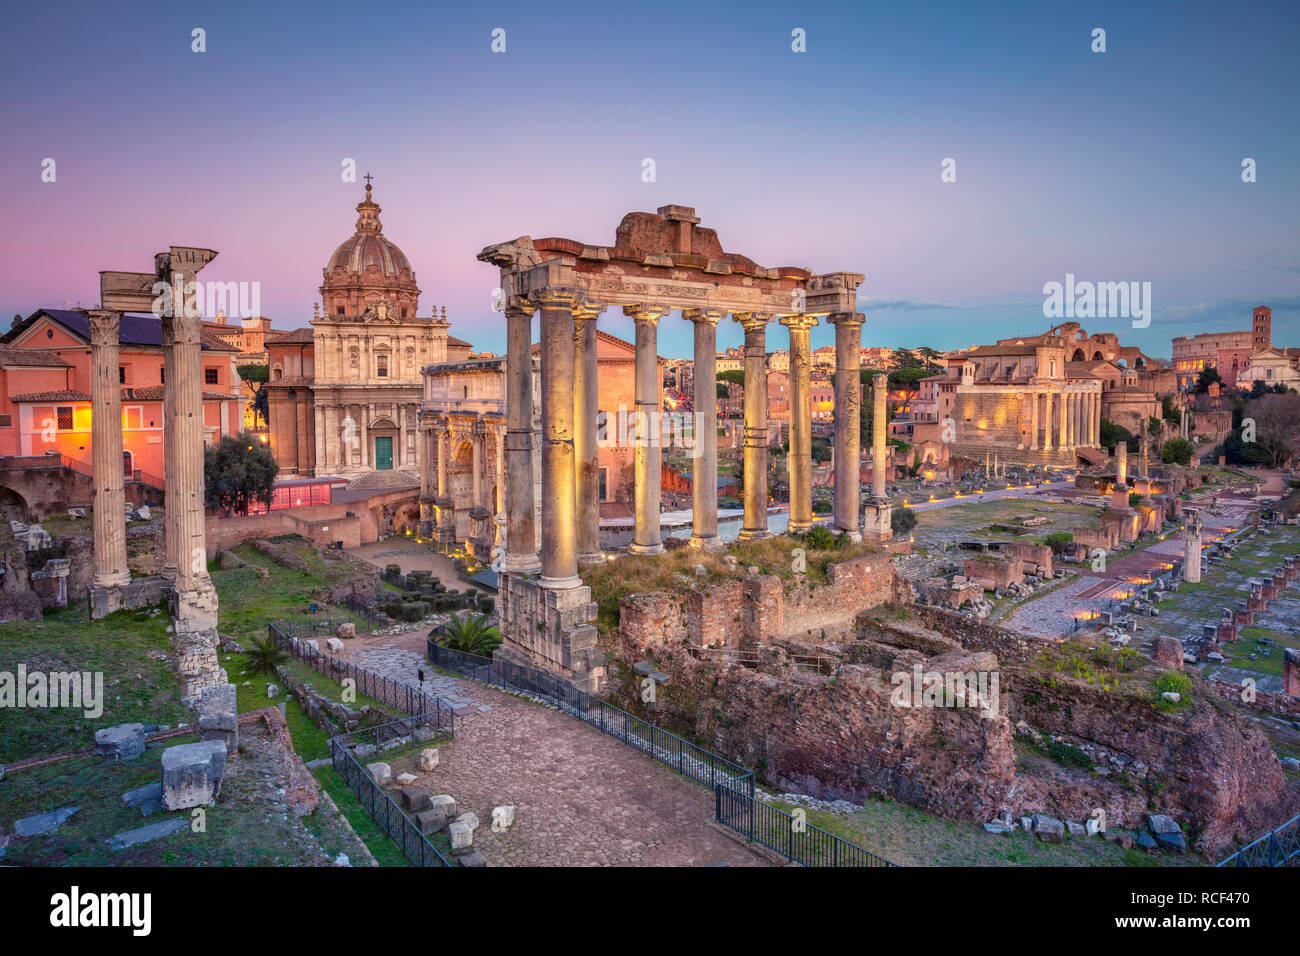 Foro Romano, Roma. Imagen de paisaje famoso antiguo Foro Romano en Roma (Italia), durante la puesta de sol Foto de stock